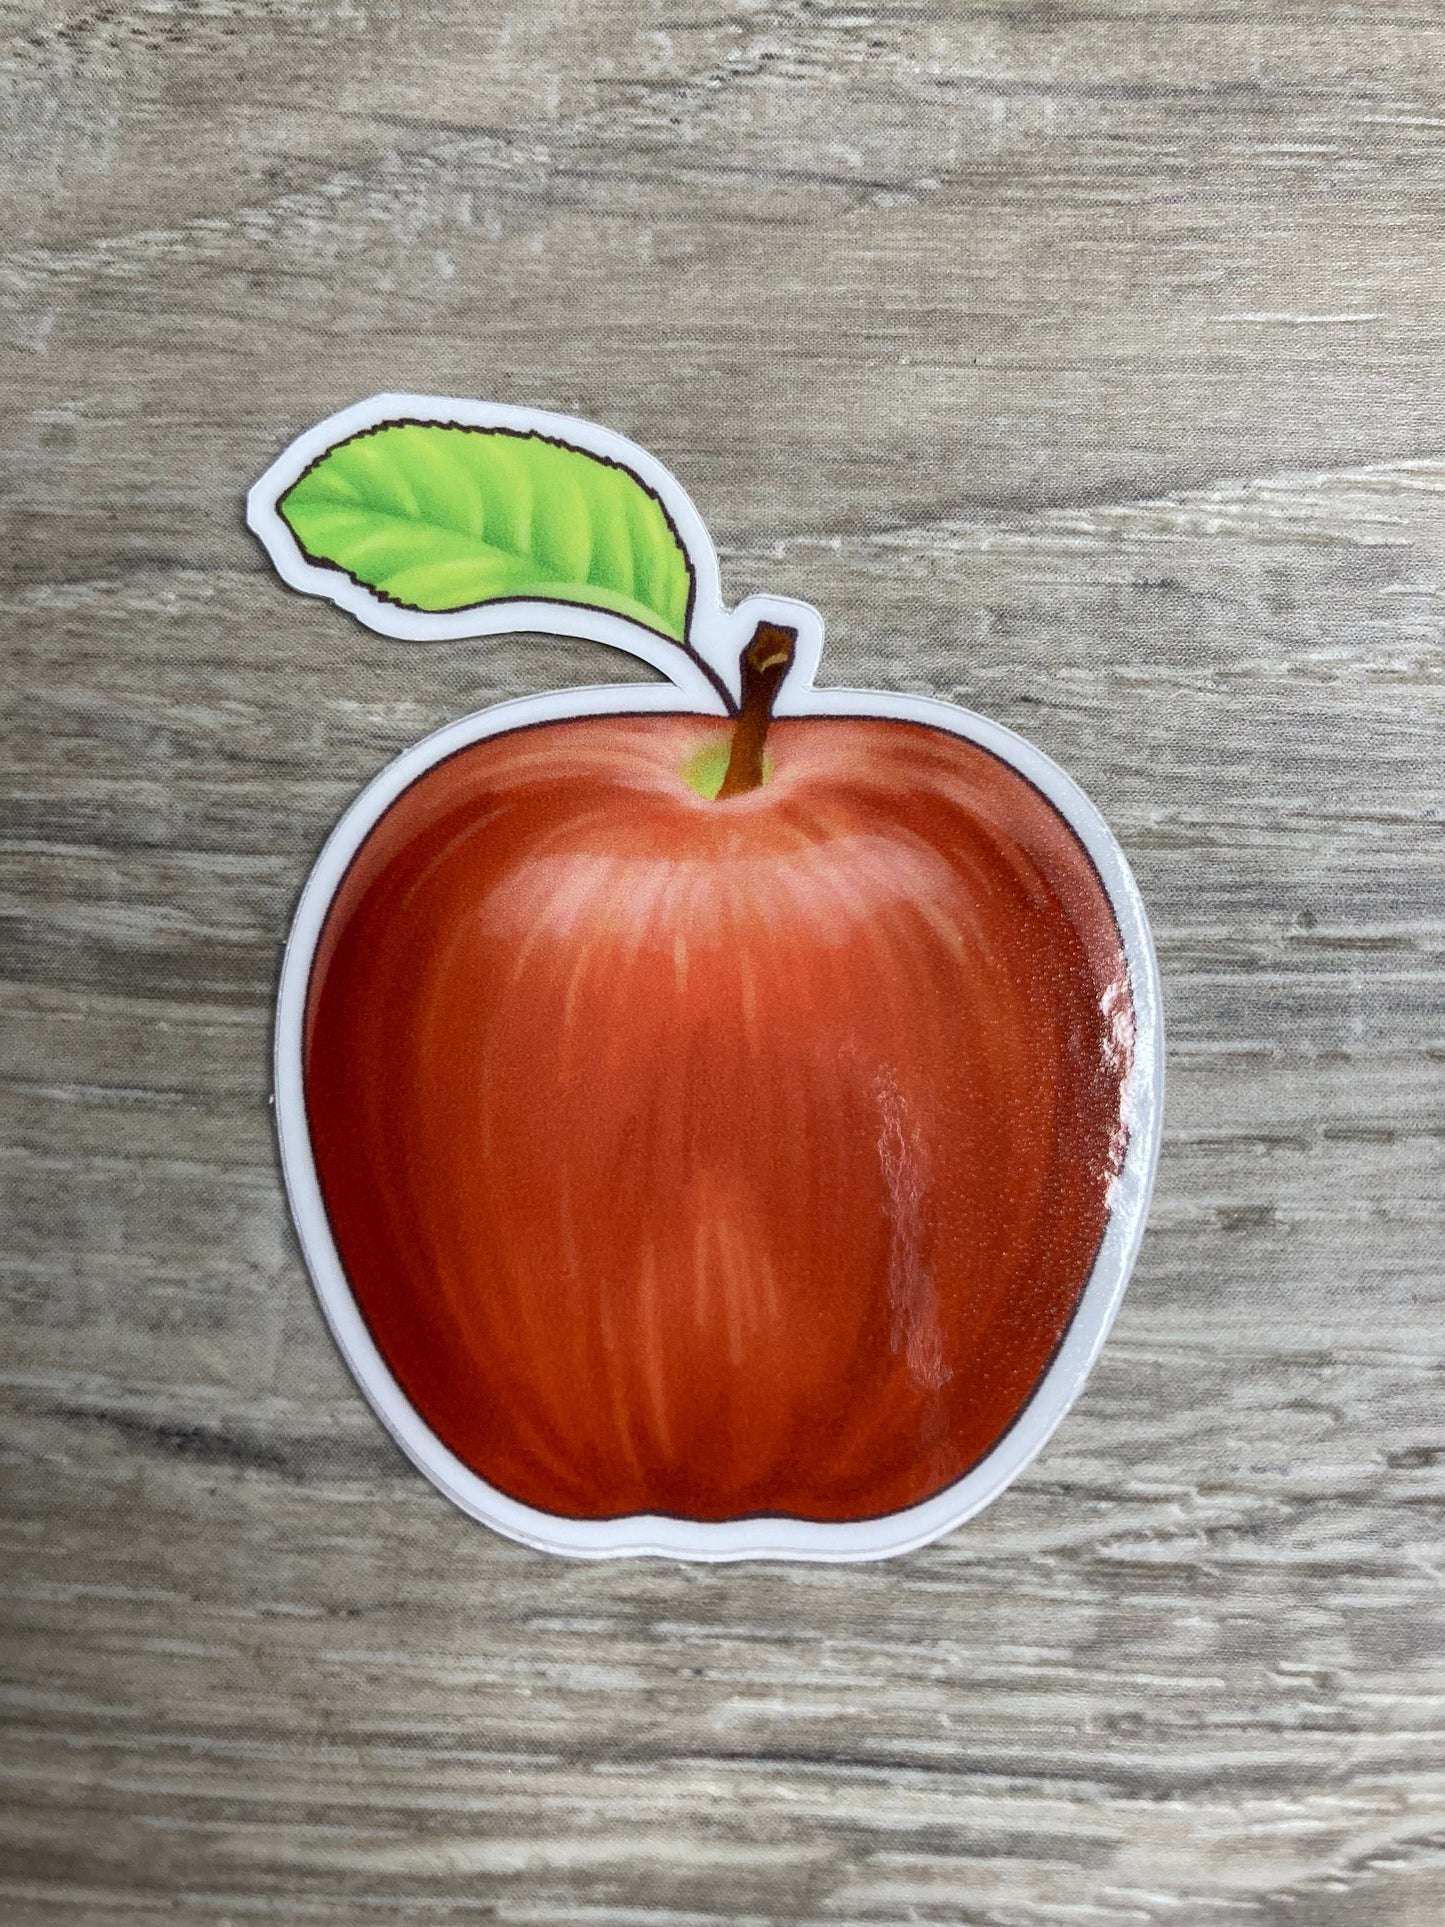 Vegetable and Fruits Vinyl Sticker 10-Pack, Vegan, Vegetarian, Farm Market, Produce Stickers